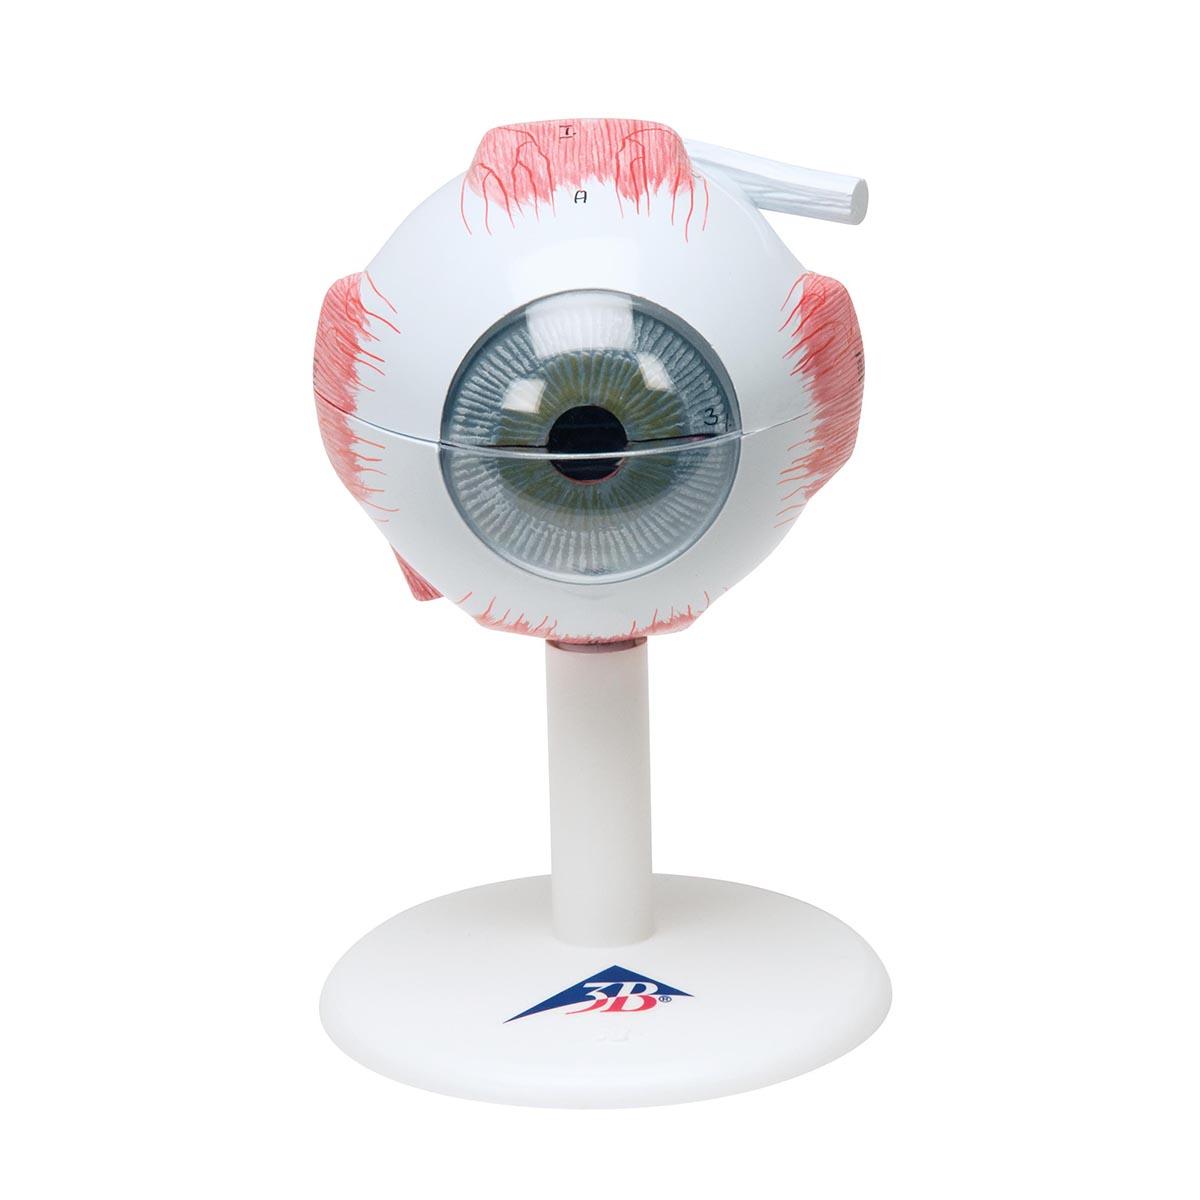 F15-0 Oko: Model oka, 3x zvětšeno, 6 dílů